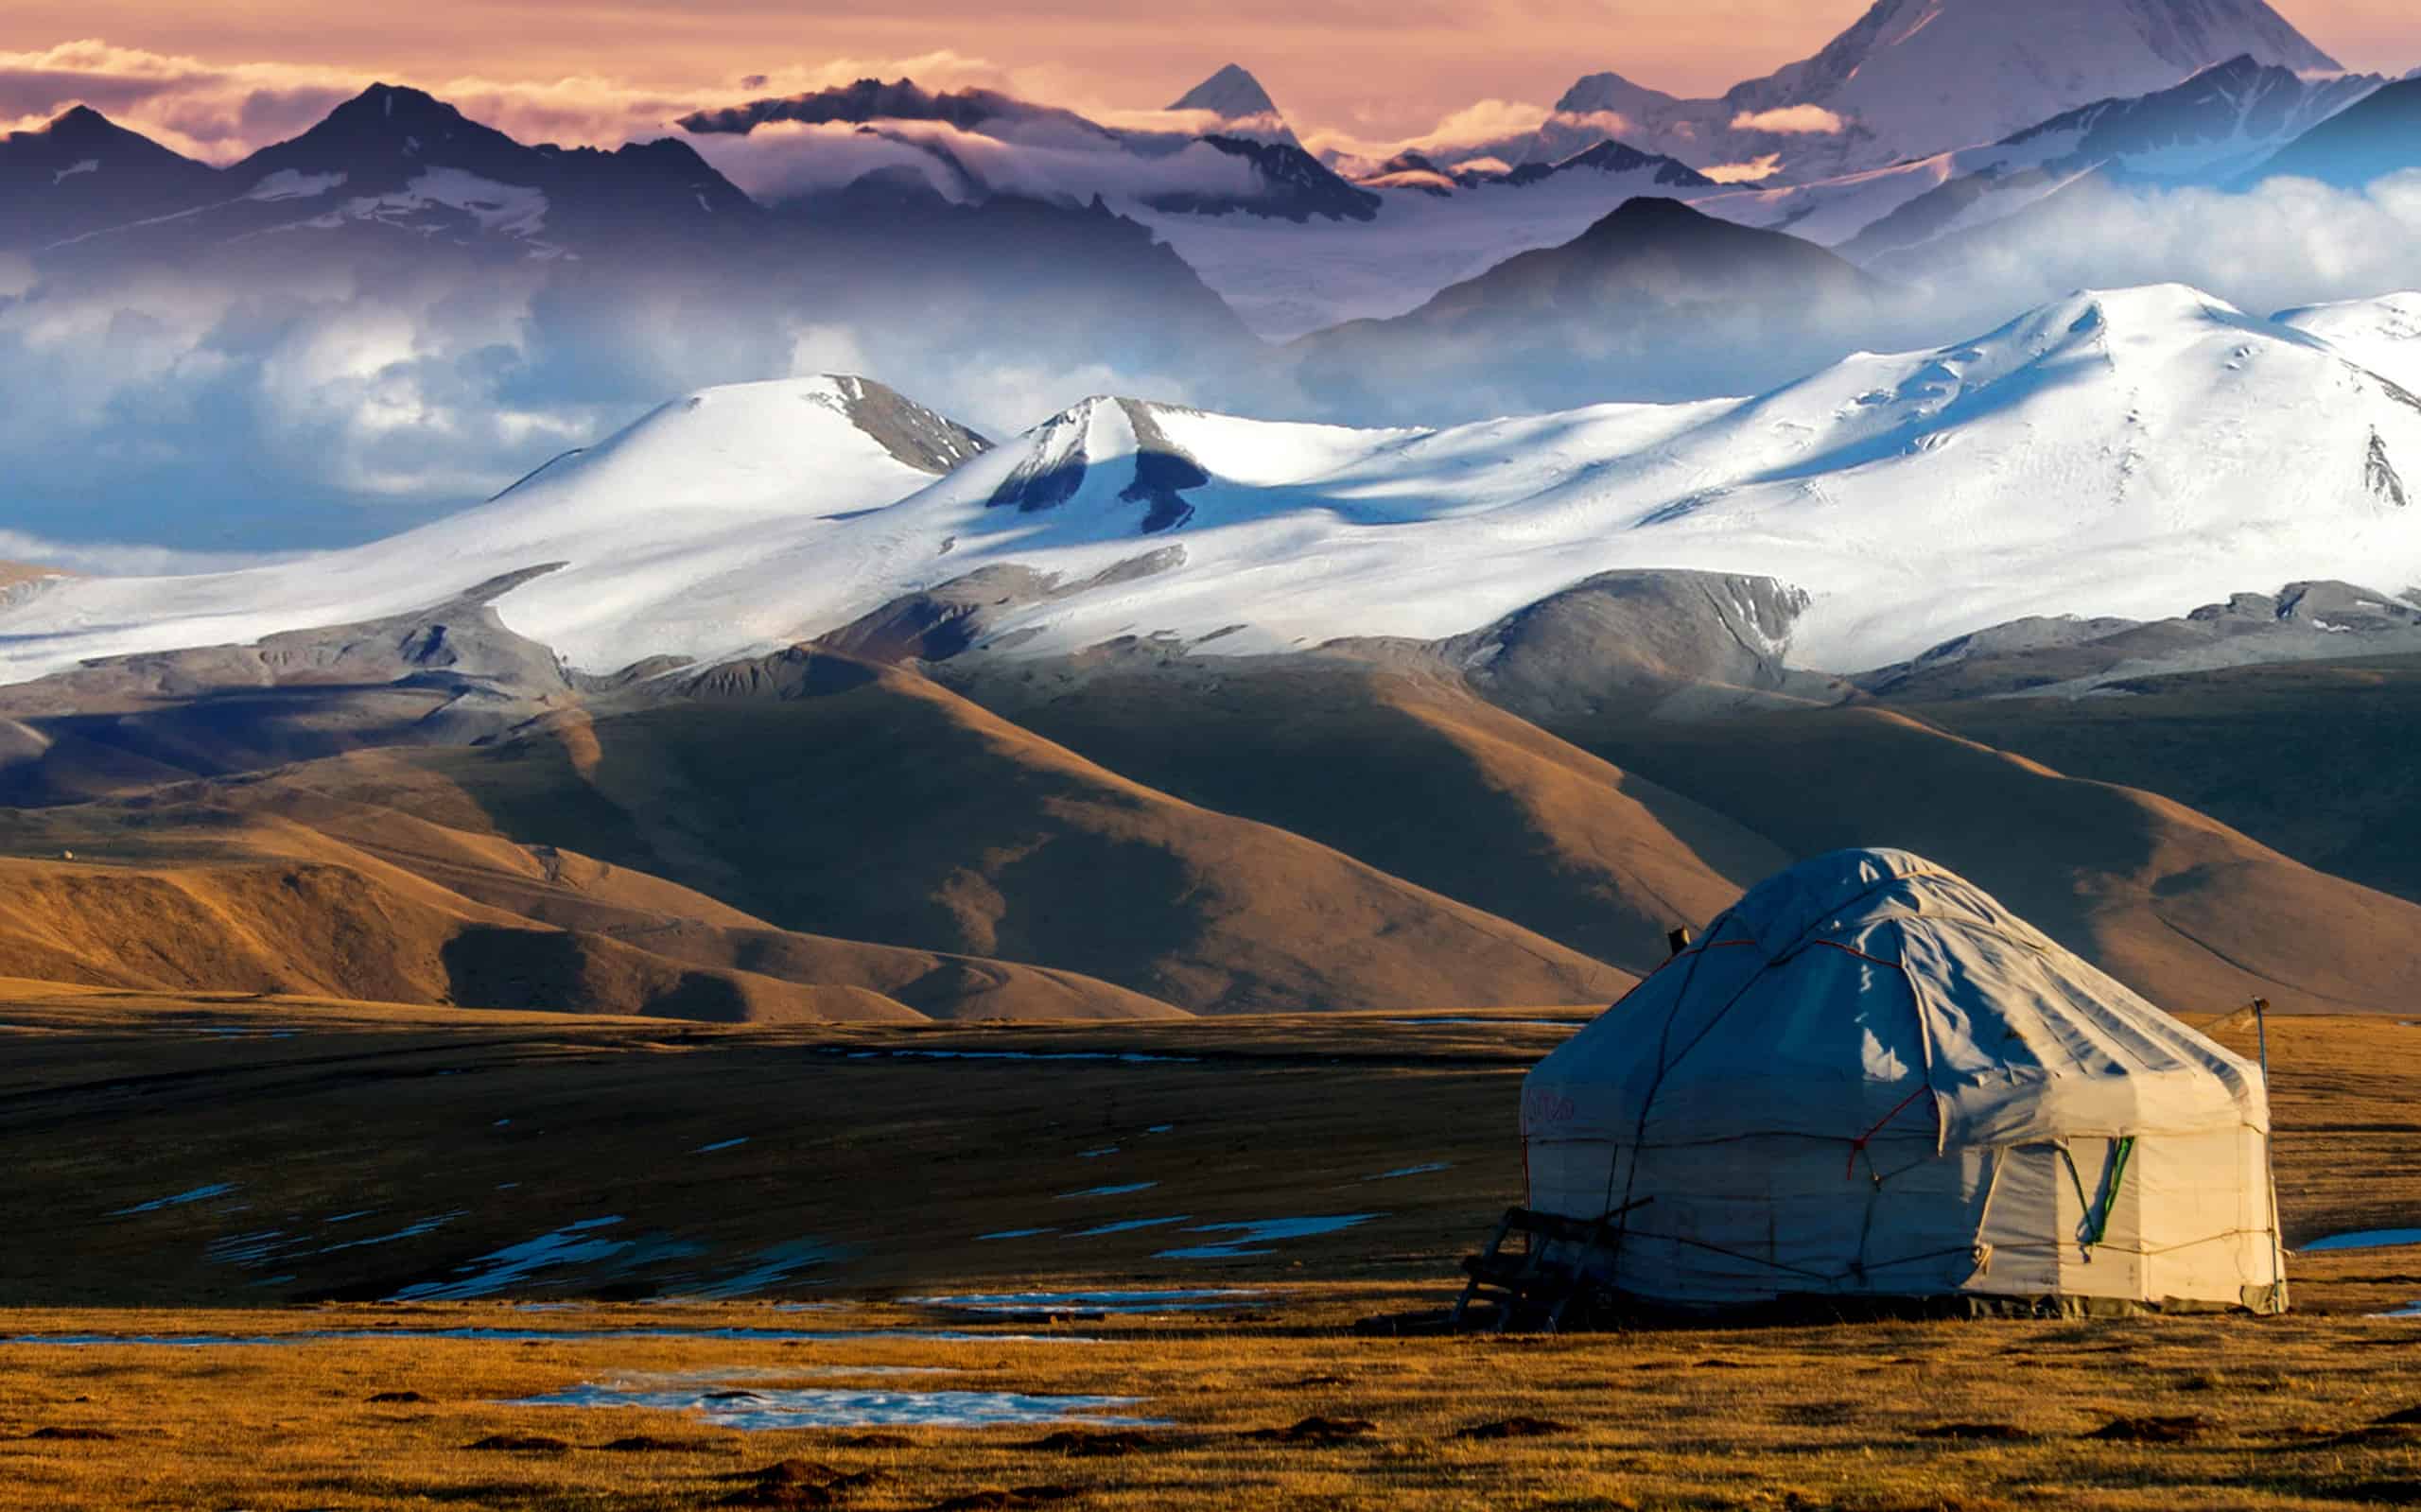 Nomadic tents known as Yurt at the Almaty Mountains, Kazakhstan